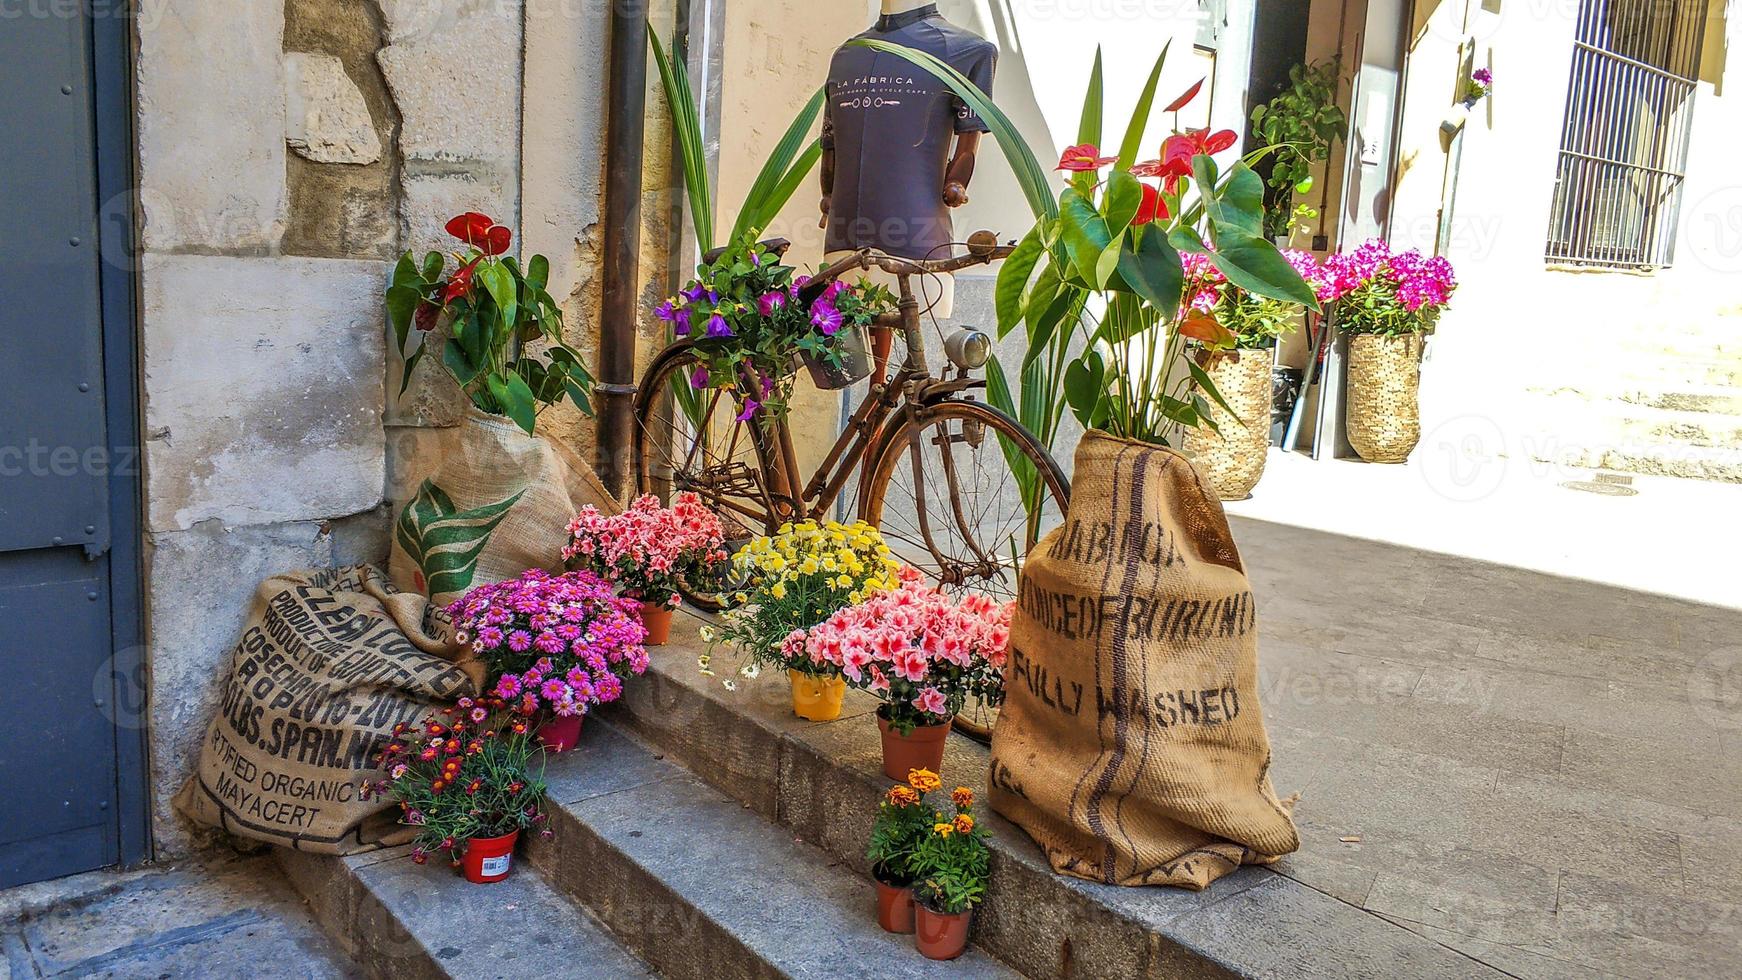 Flower Festival in Girona Temps de Flors, Spain. 2018 photo